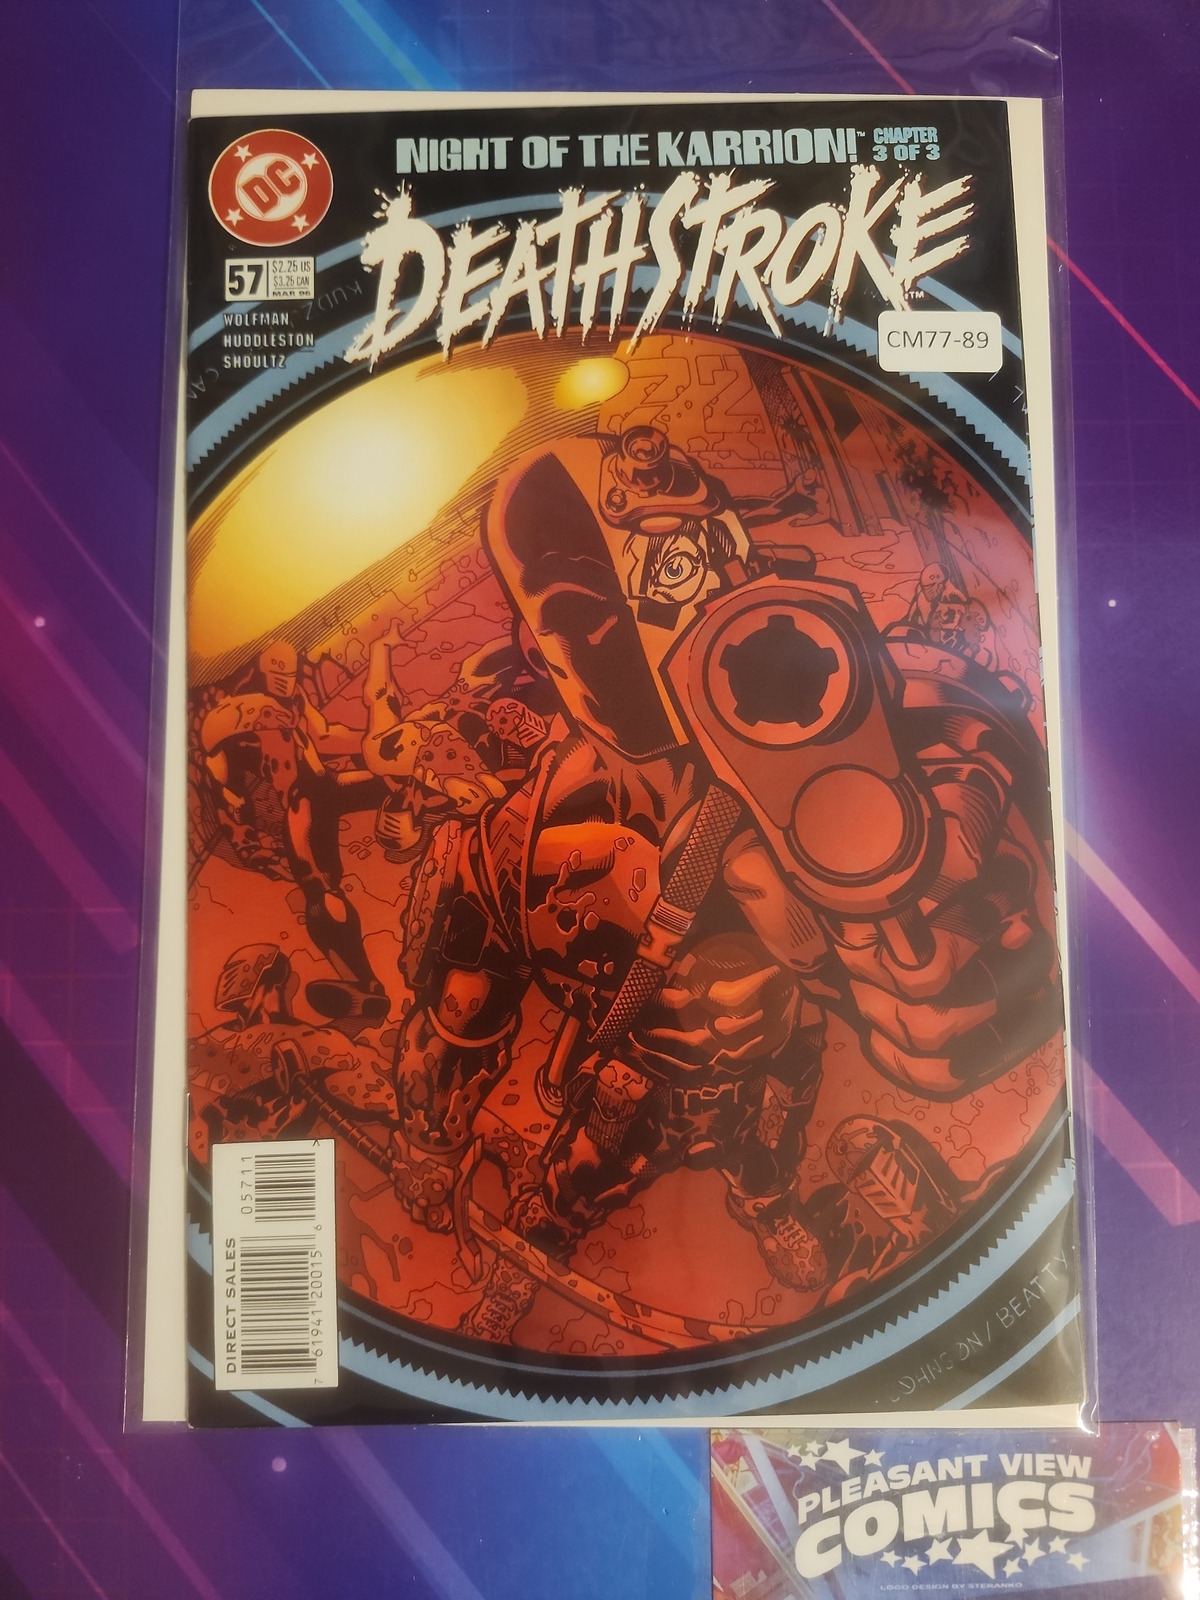 DEATHSTROKE #57 VOL. 1 HIGH GRADE DC COMIC BOOK CM77-89